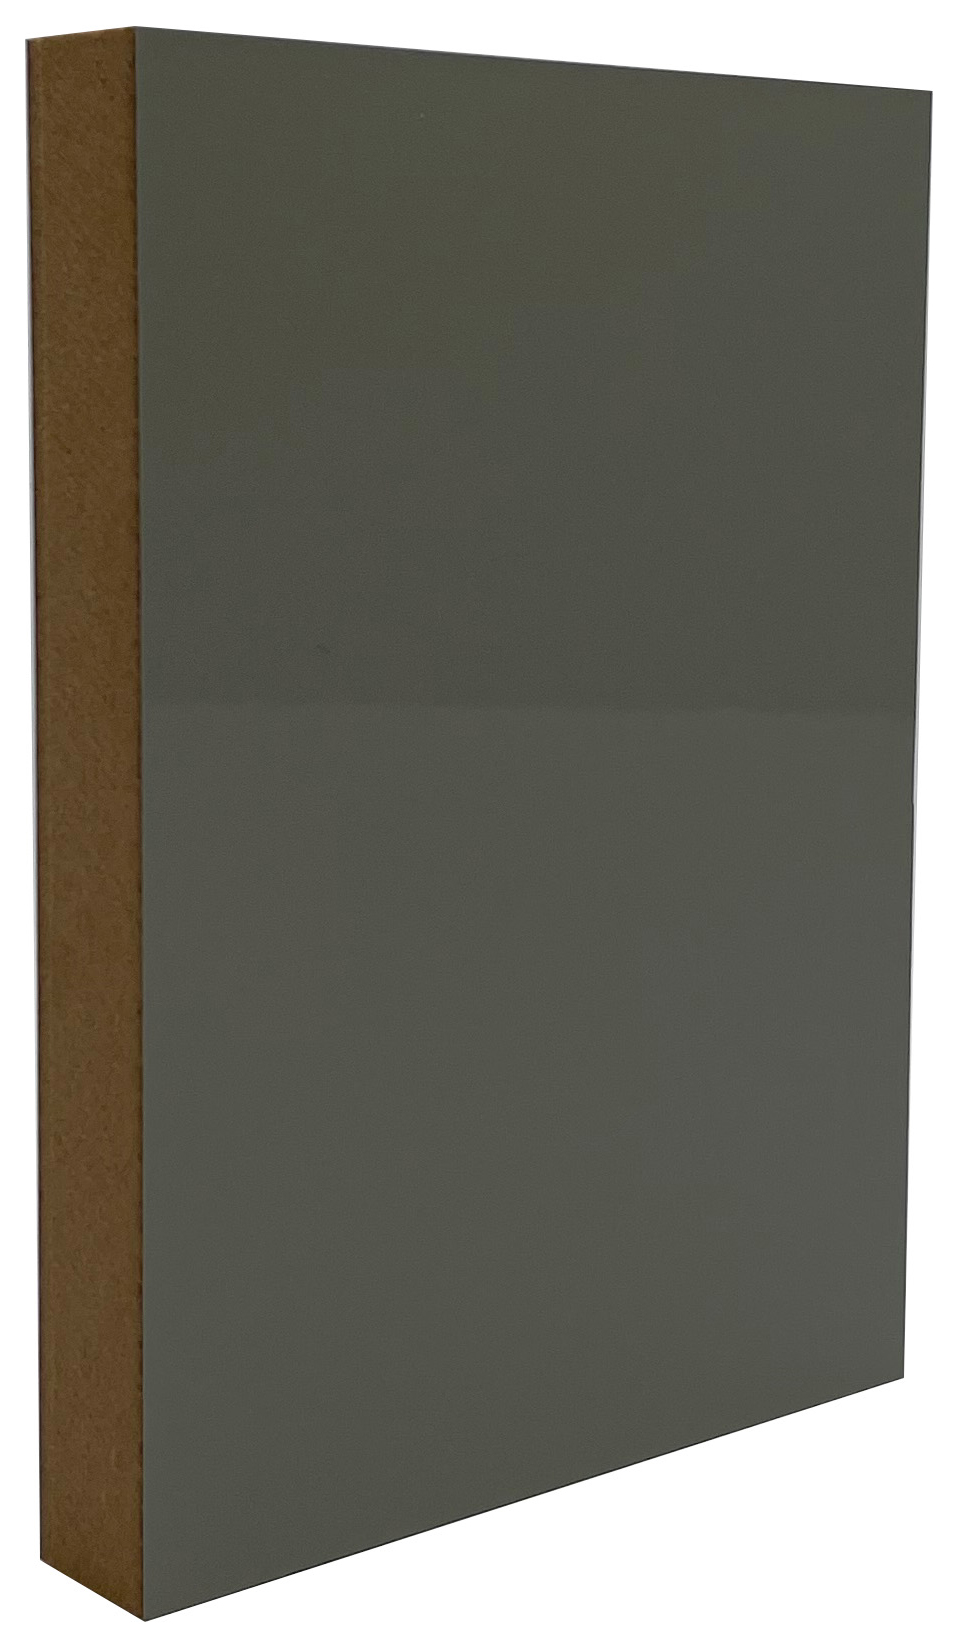 Wickes Orlando/Madison Gloss Dark Grey Colour Block Sample - 148mm x 105mm x 18mm